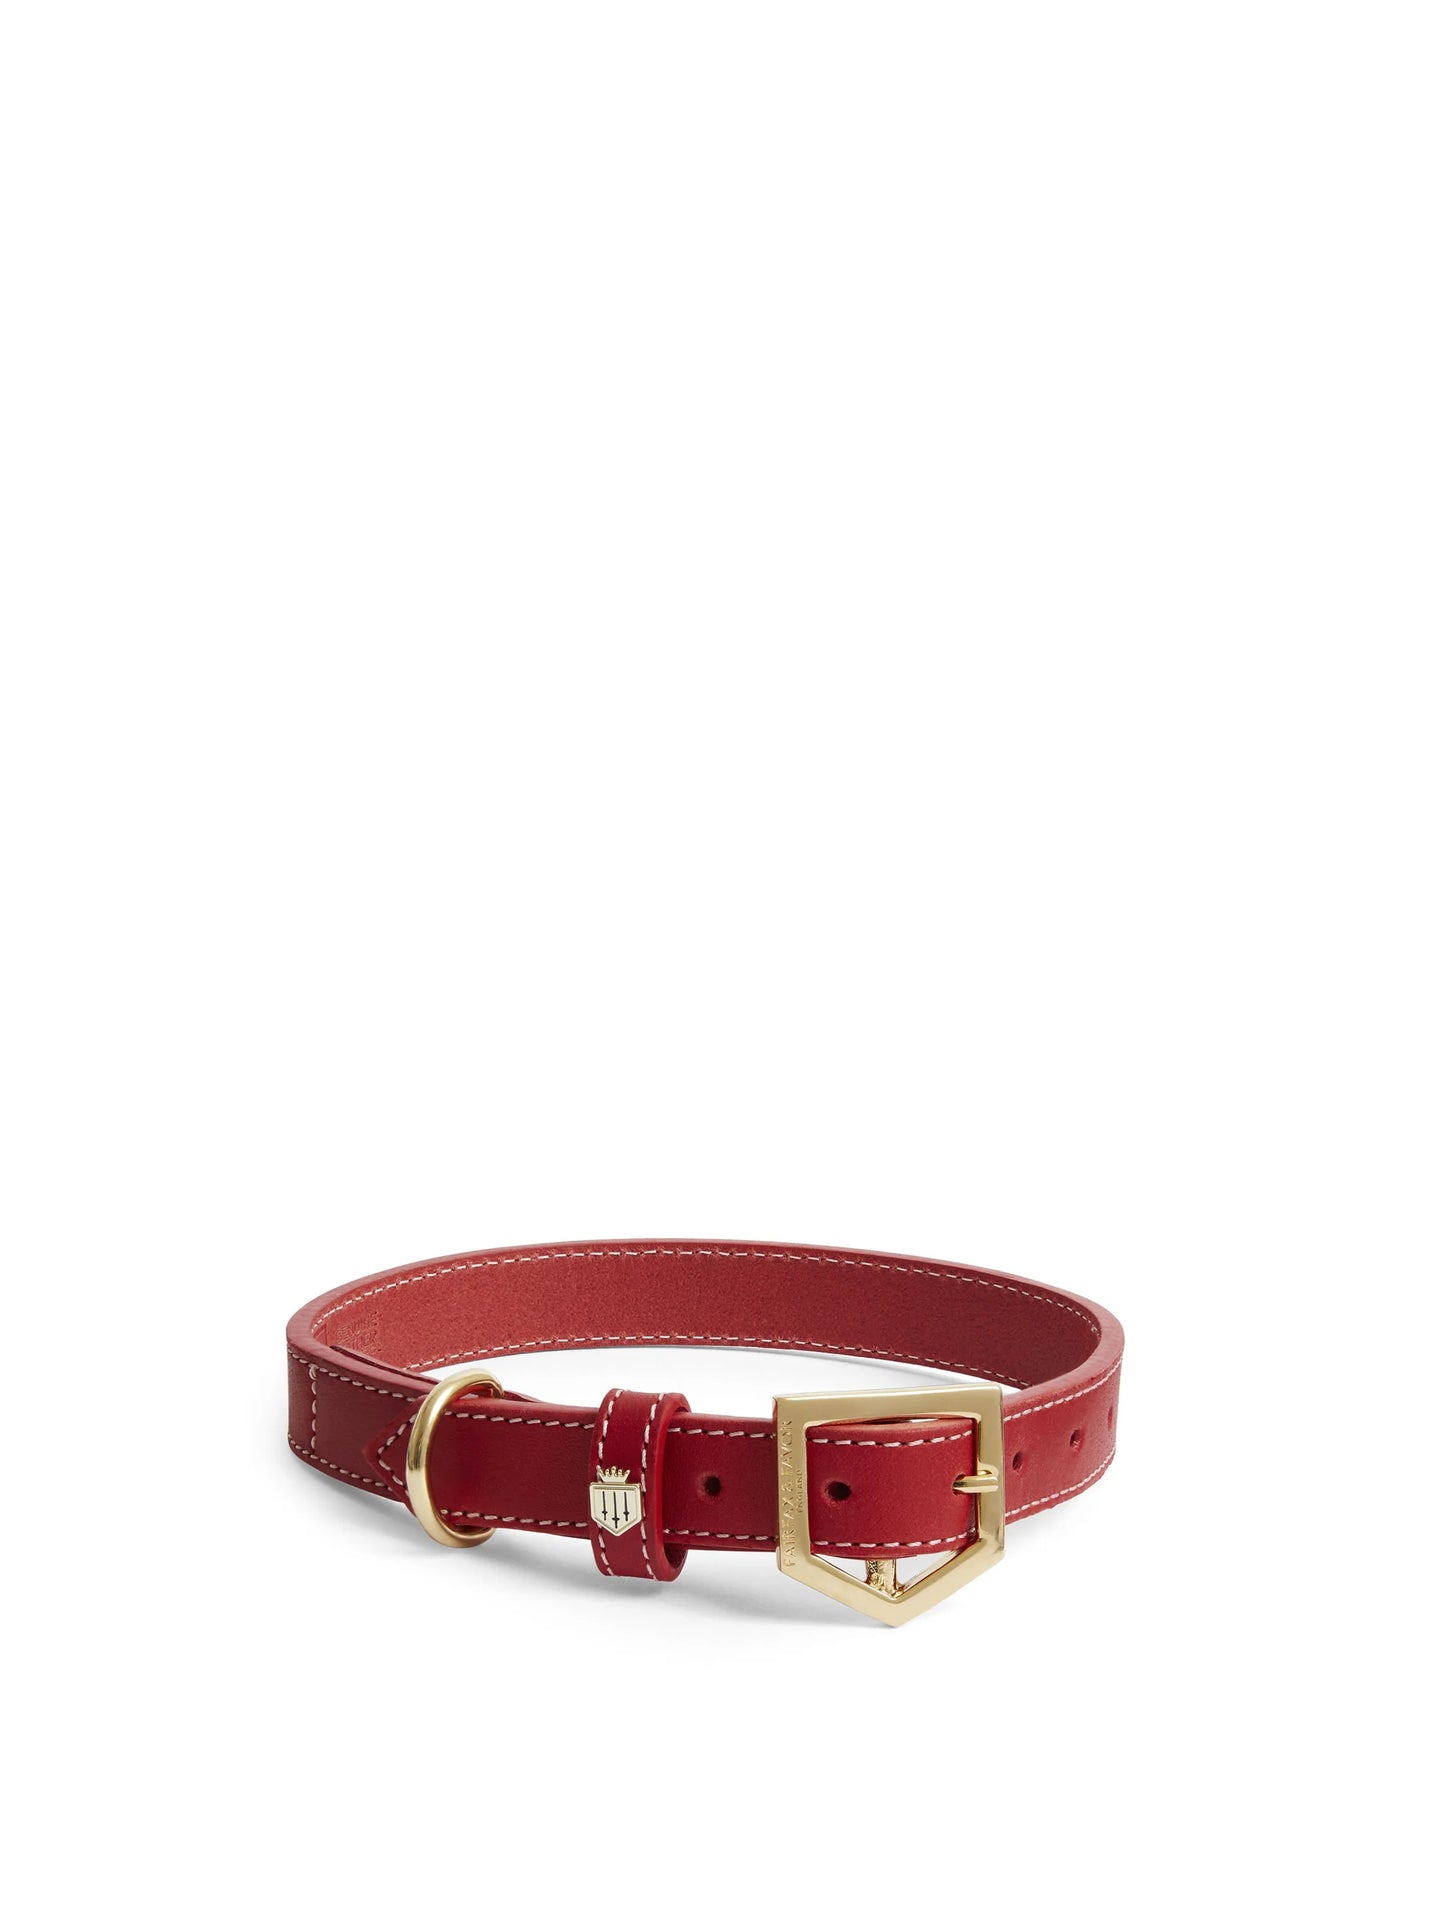 Fitzroy Red Dog Collar